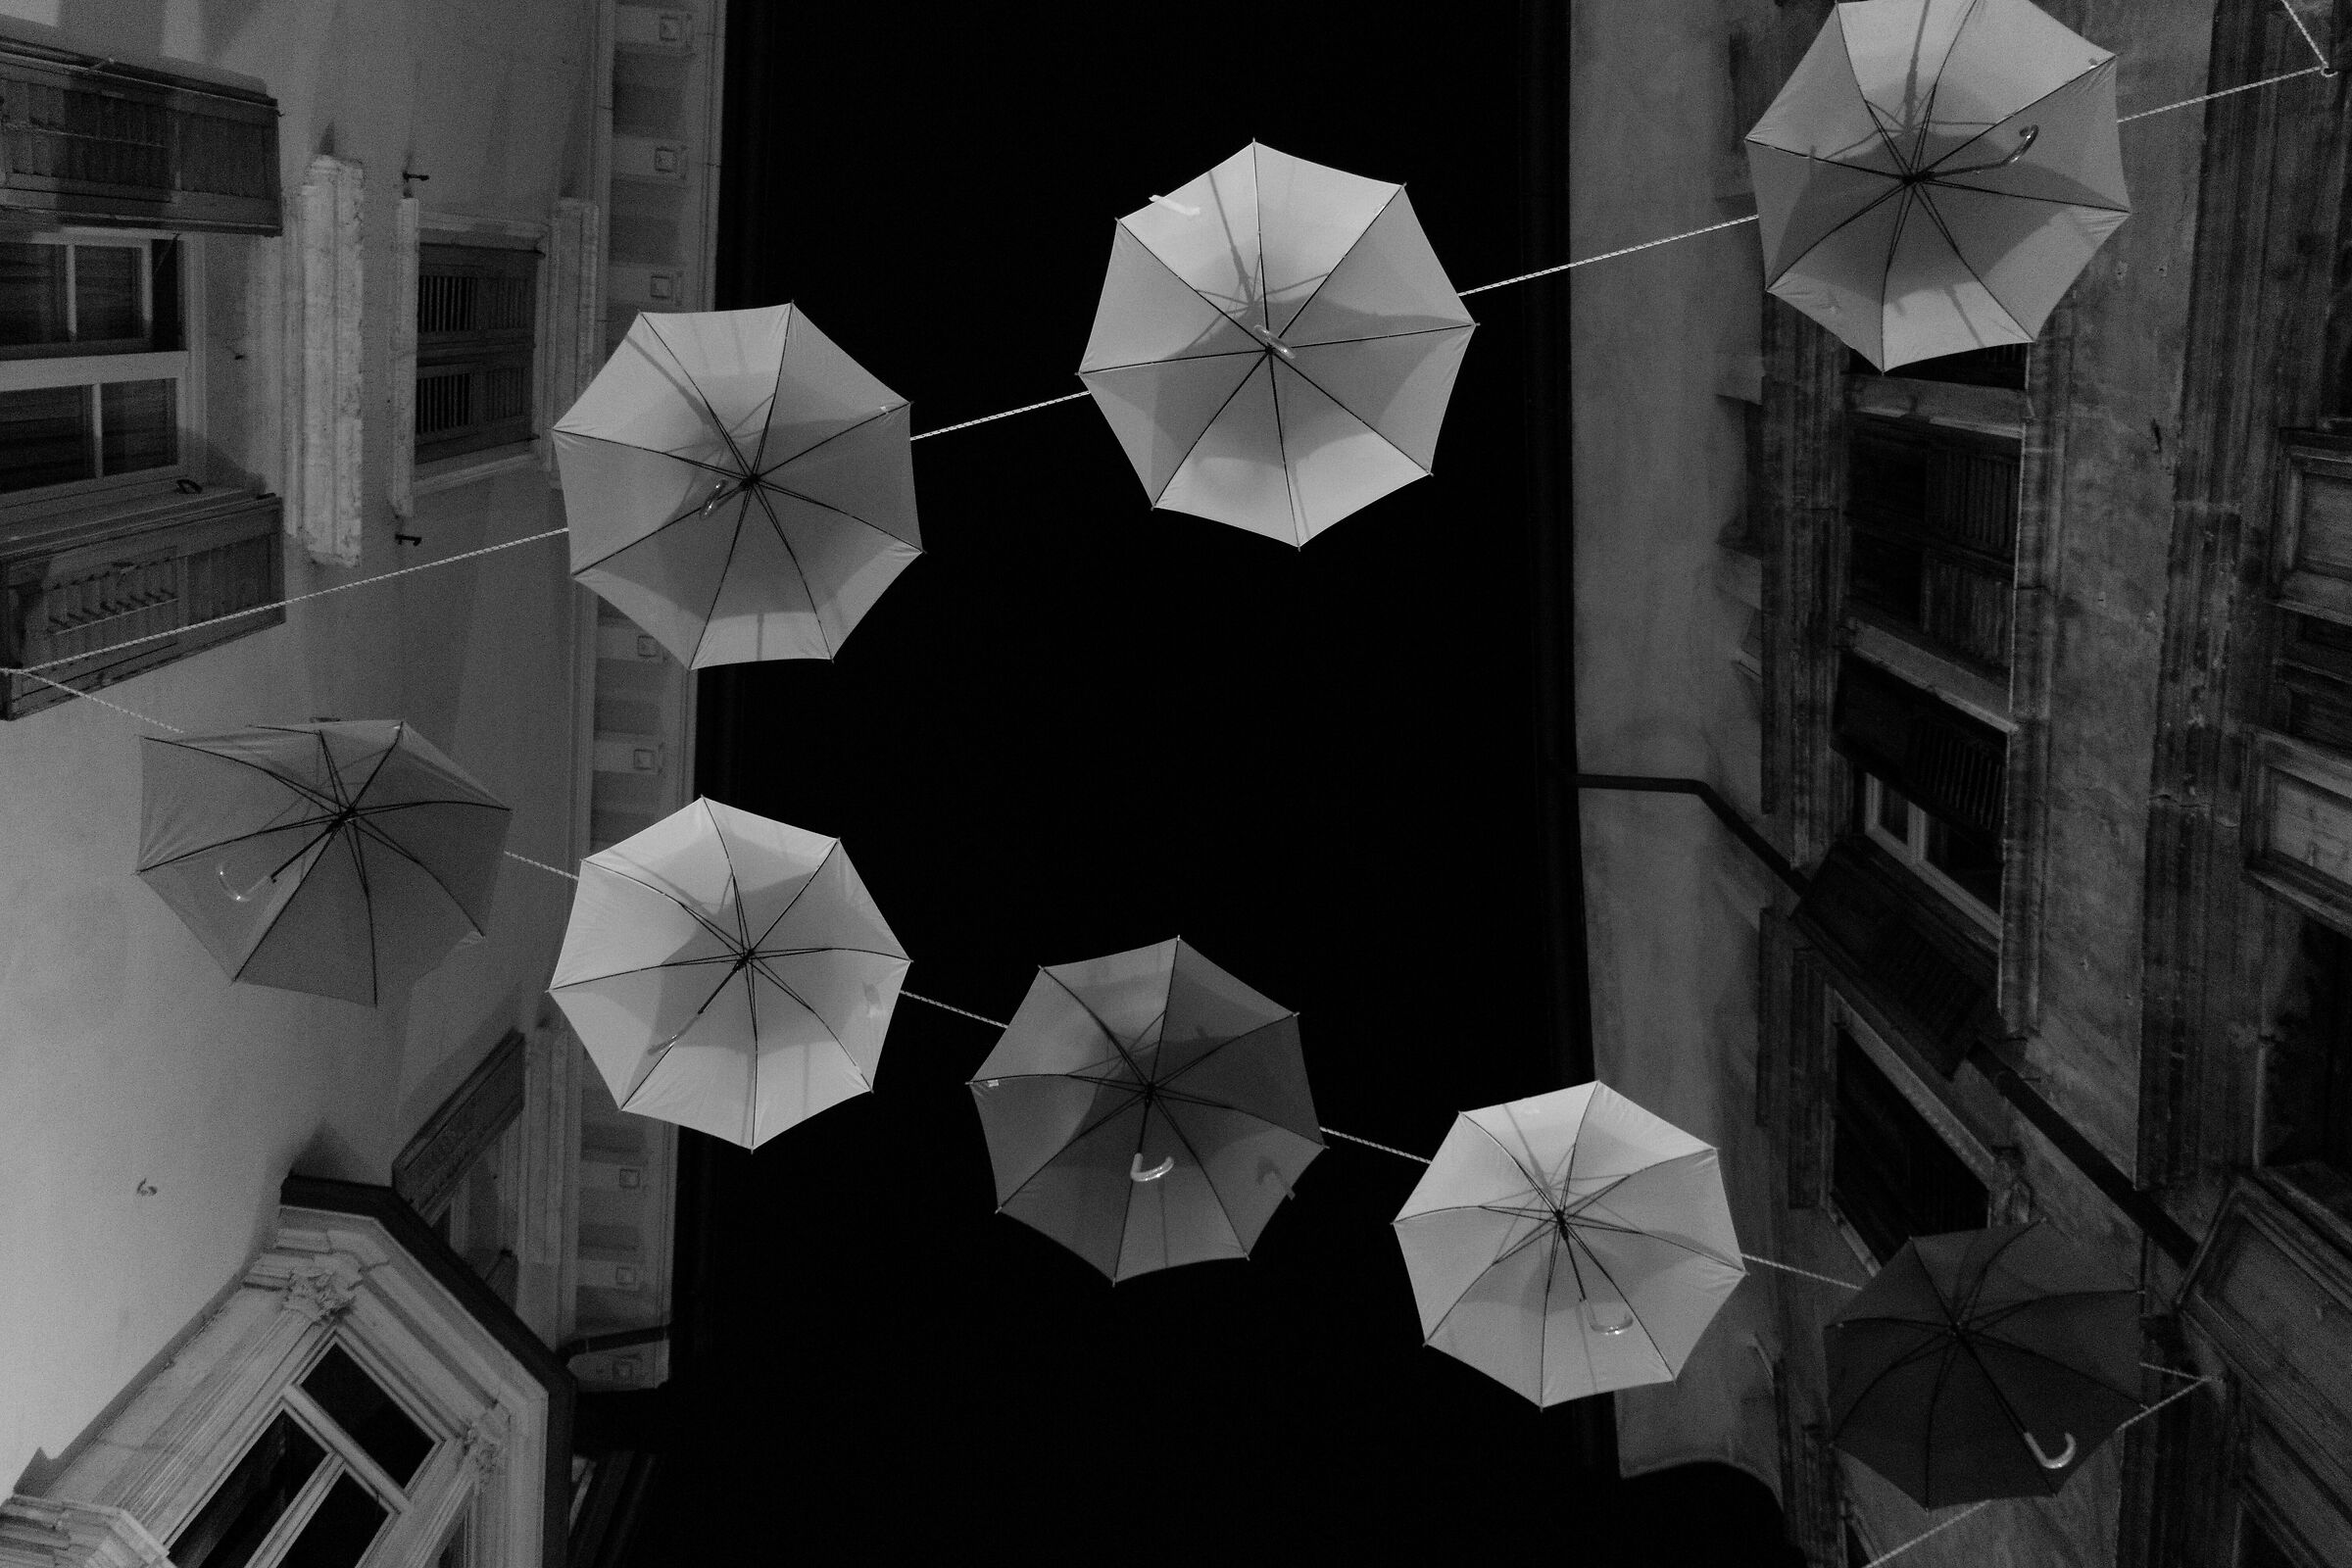 Umbrellas and Umbrellas...